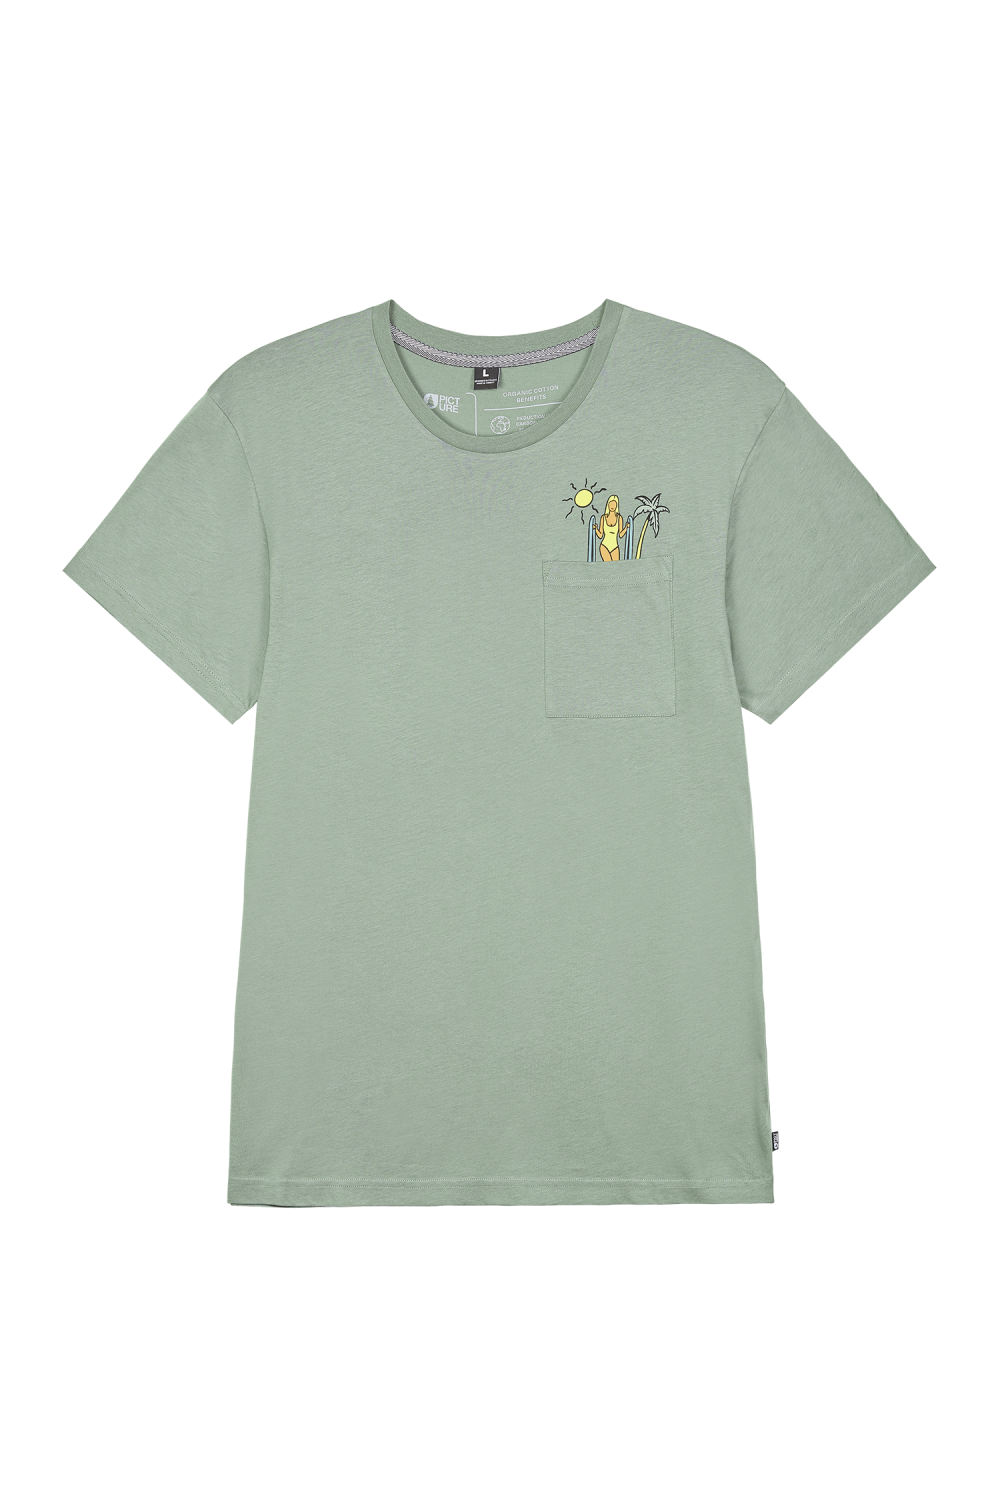 Picture Organic clothing t shirt - Sunk Tee - vert